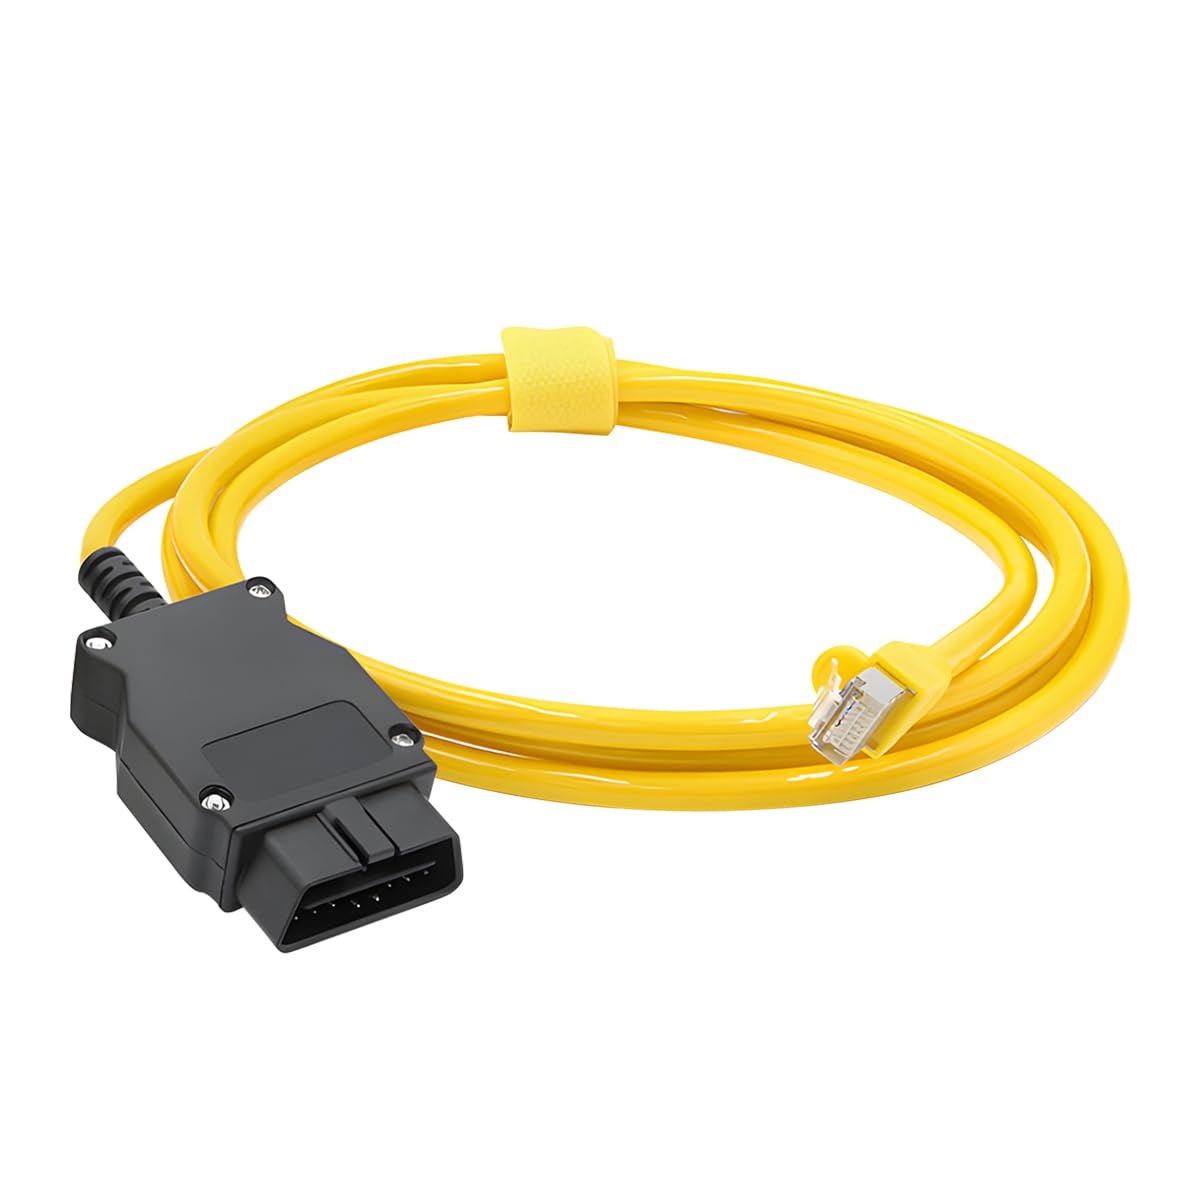 CGEAMDY Ethernet Enet OBD Kabel, ENET OBD Netzwerk Verlängerungskabel Kabel, Cable Coding F-Serie, Ethernet Diagnose-Interface Cable Adapterfür Diagnose und Codierung von CGEAMDY